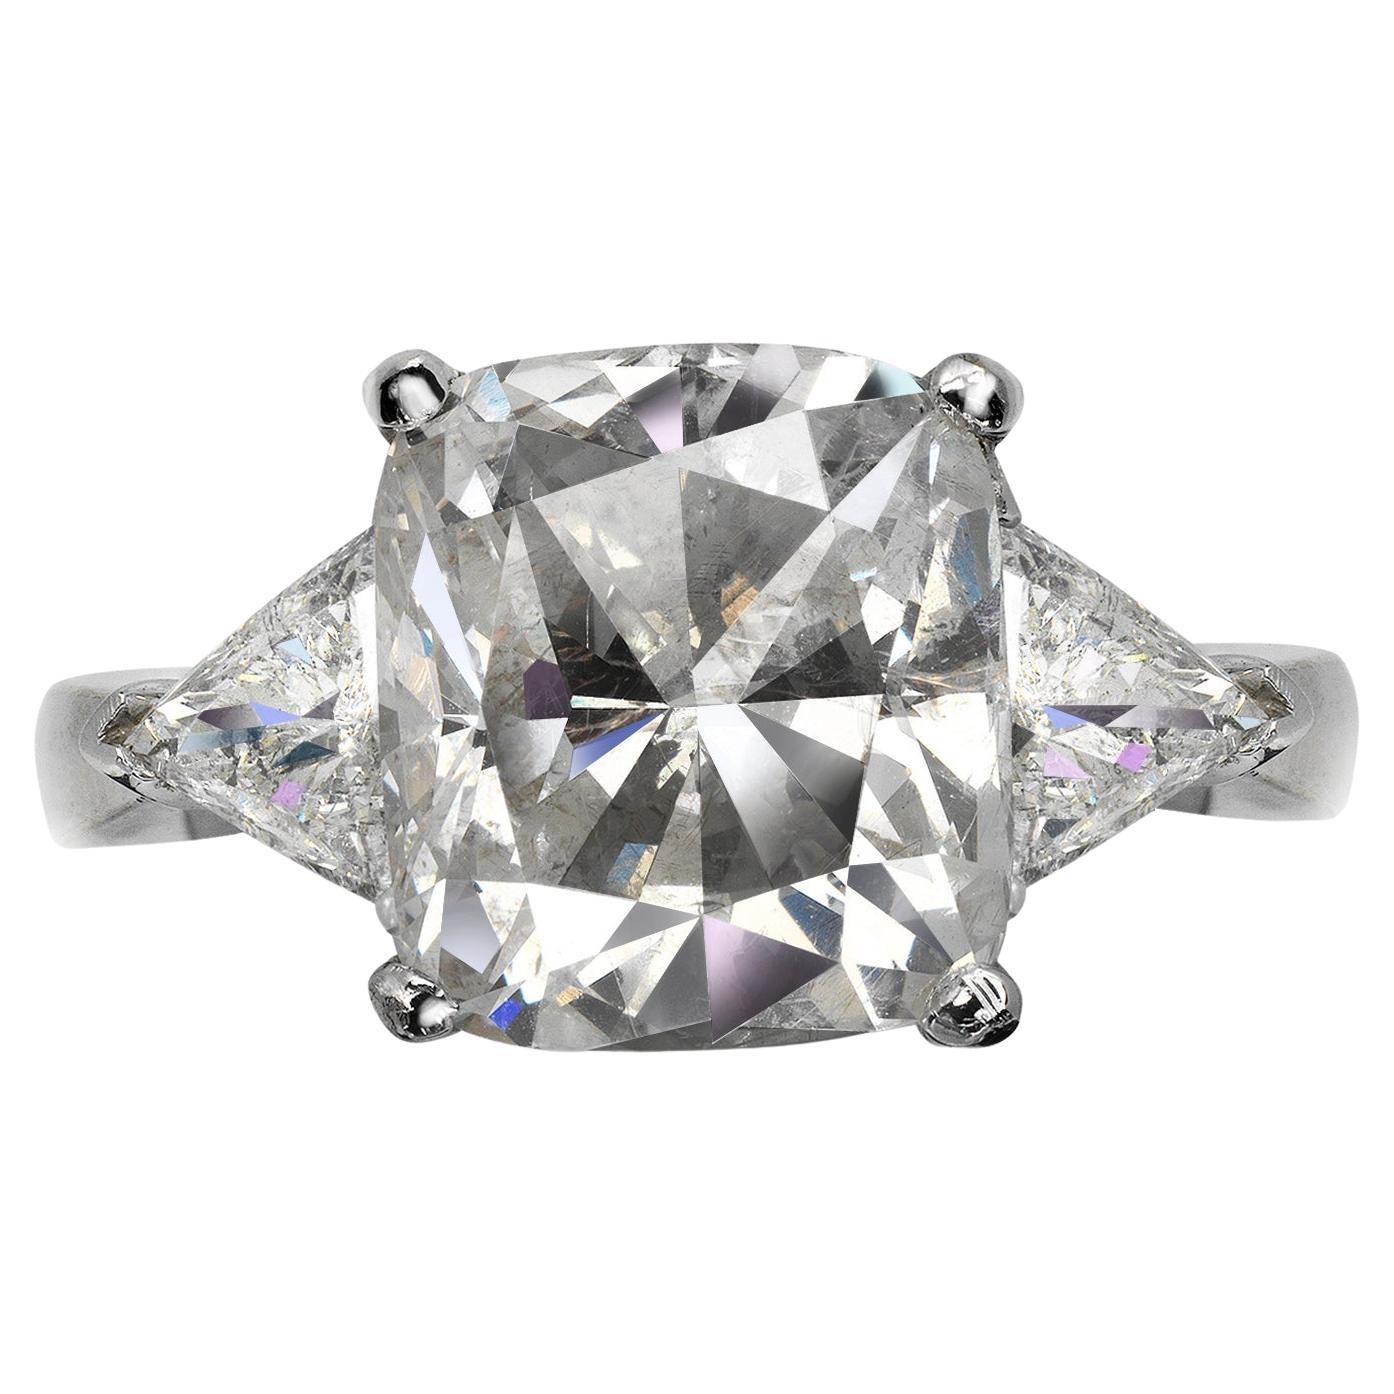 7 Carat Cushion Cut Diamond Engagement Ring Certified H SI1